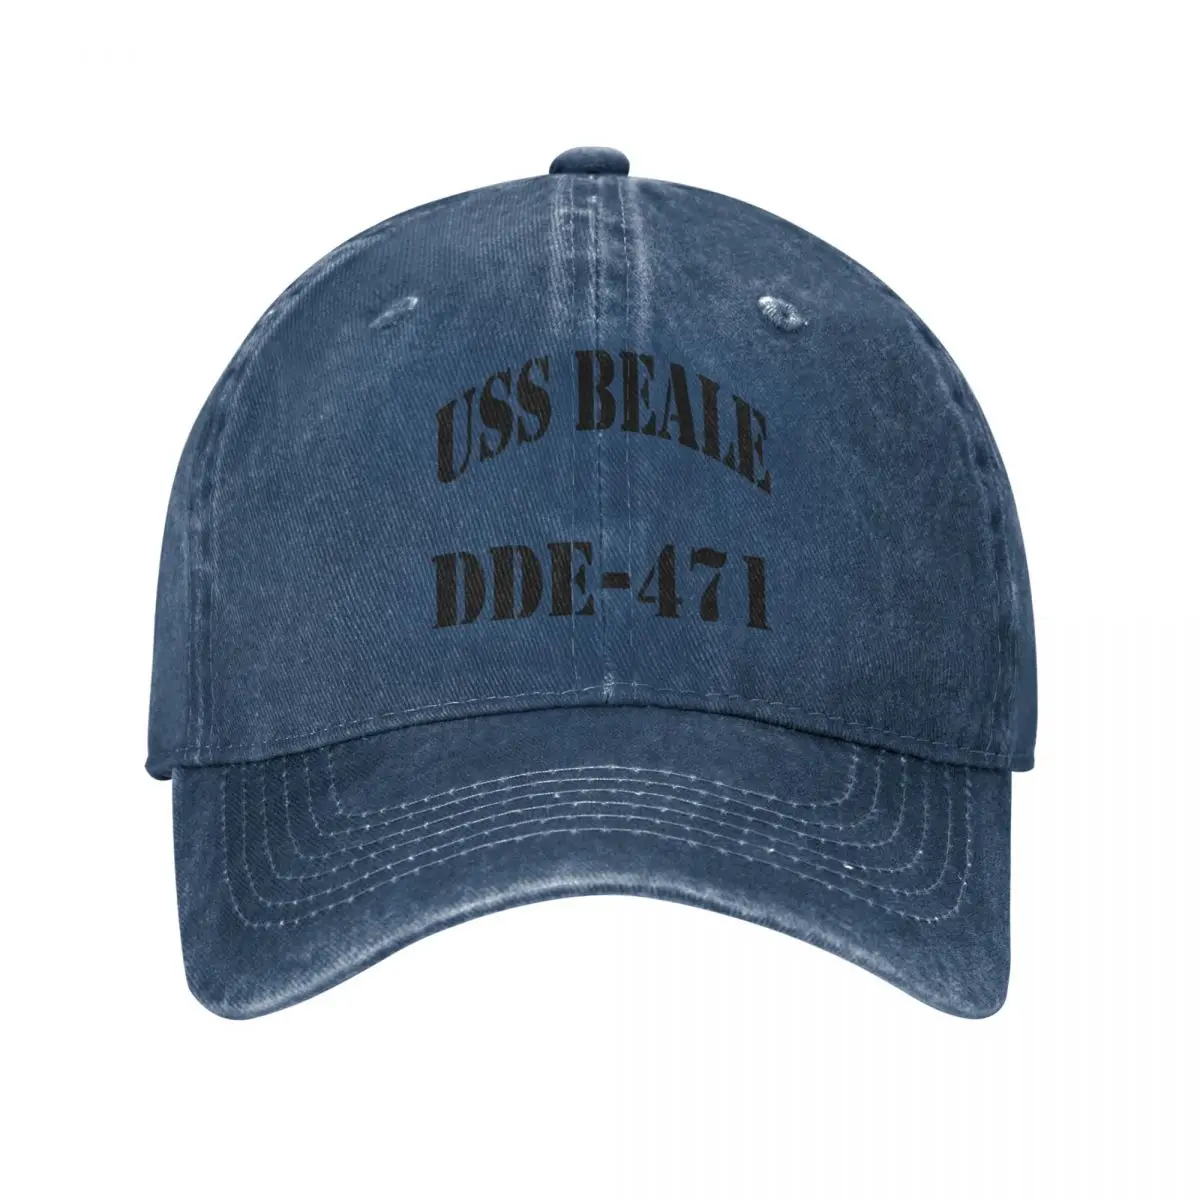 

USS BEALE (DDE-471) SHIP'S STORE Baseball Cap Hat Beach Hiking Hat Luxury Cap Girl'S Hats Men'S